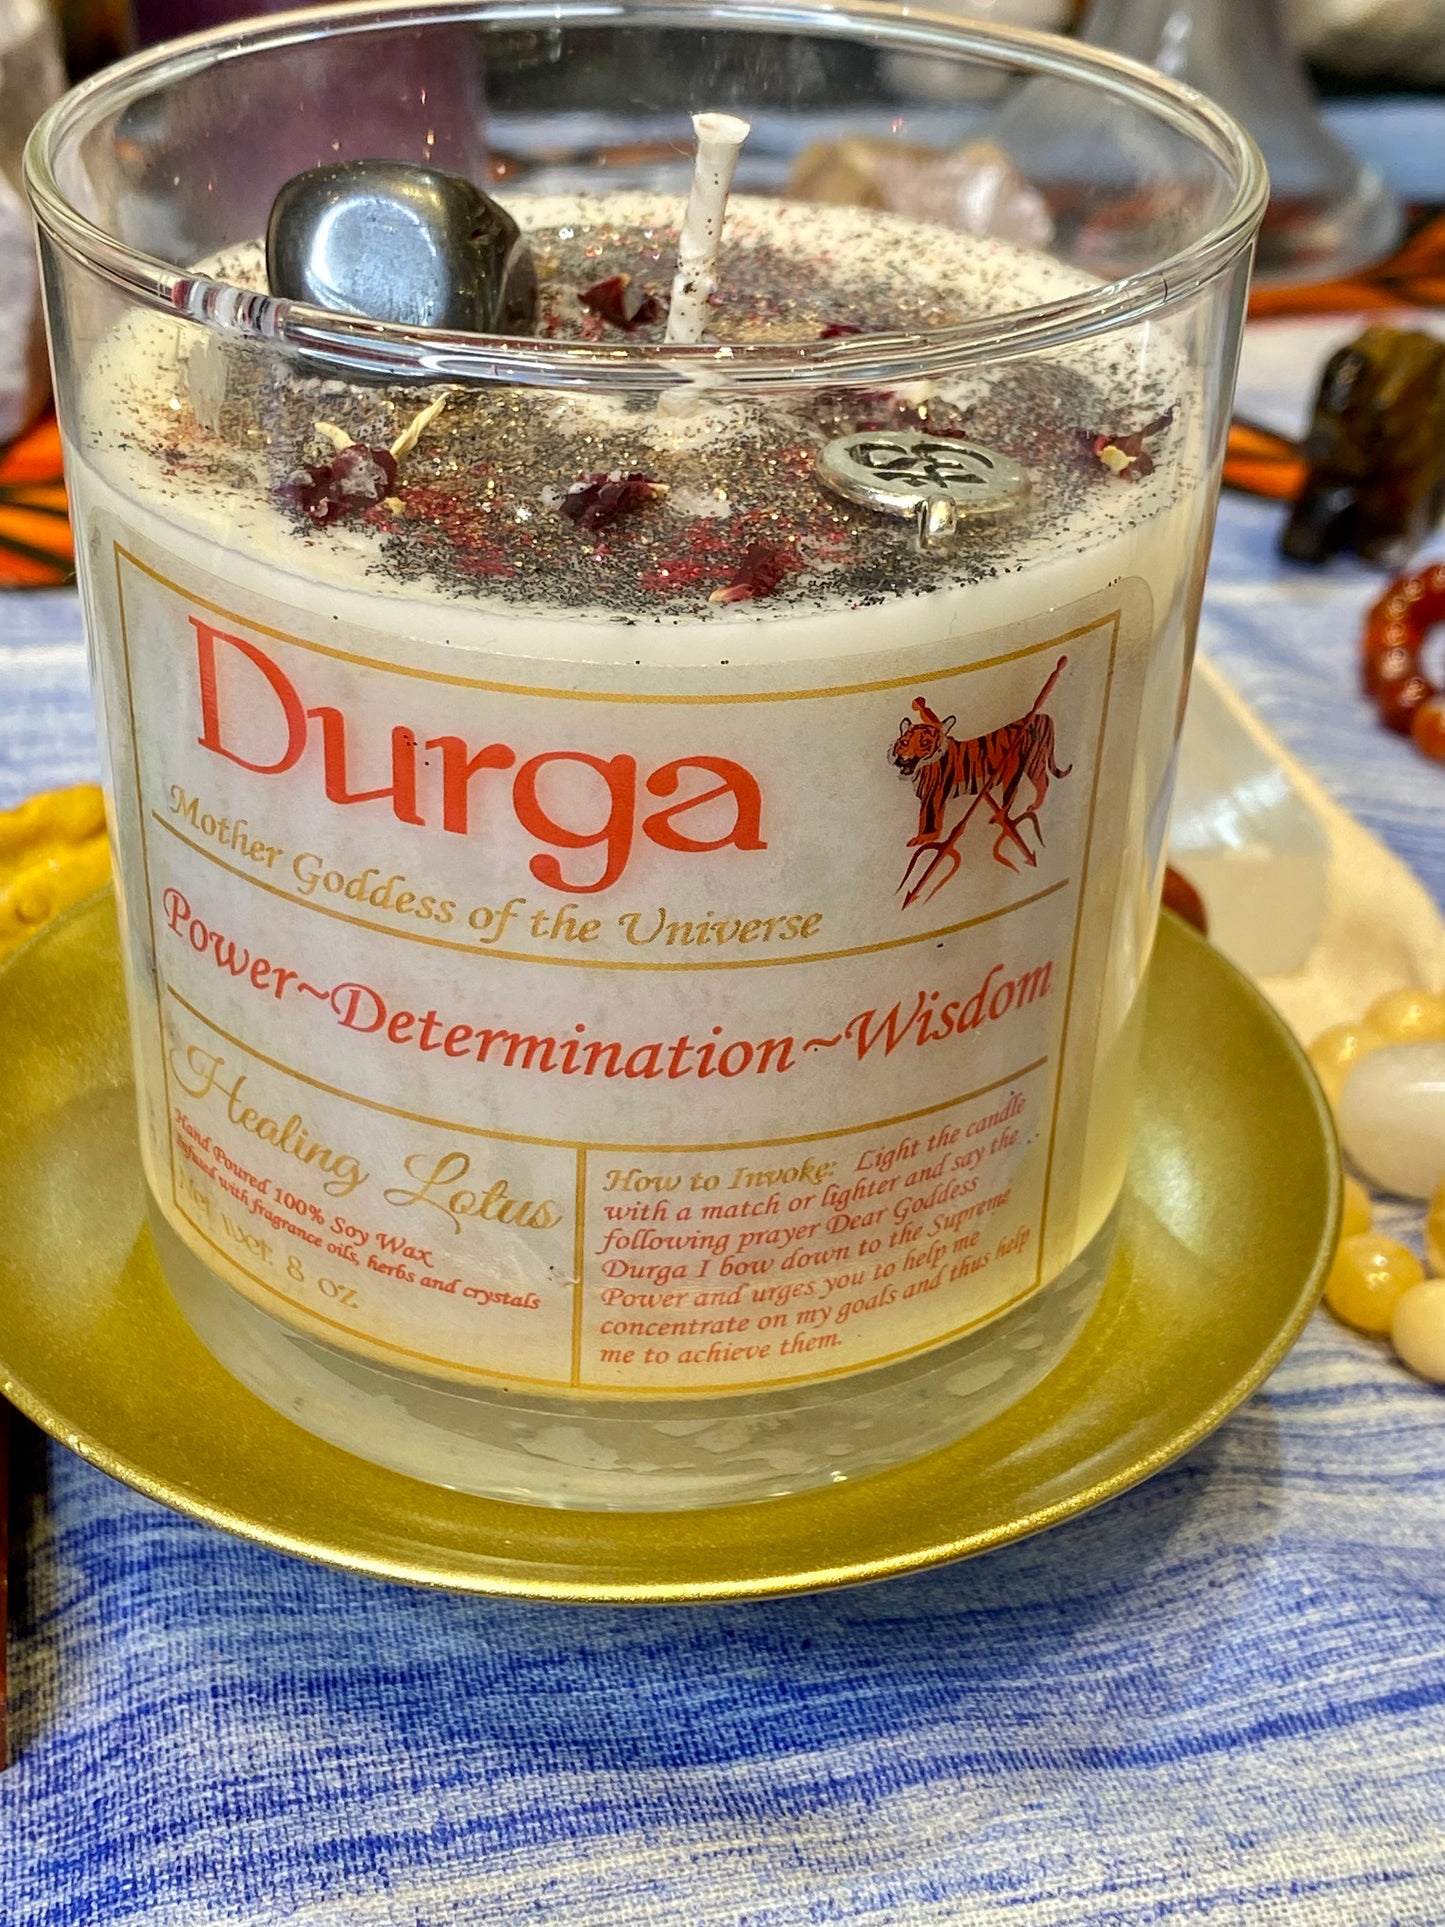 Durga Goddess Candle (H.L. Collection)